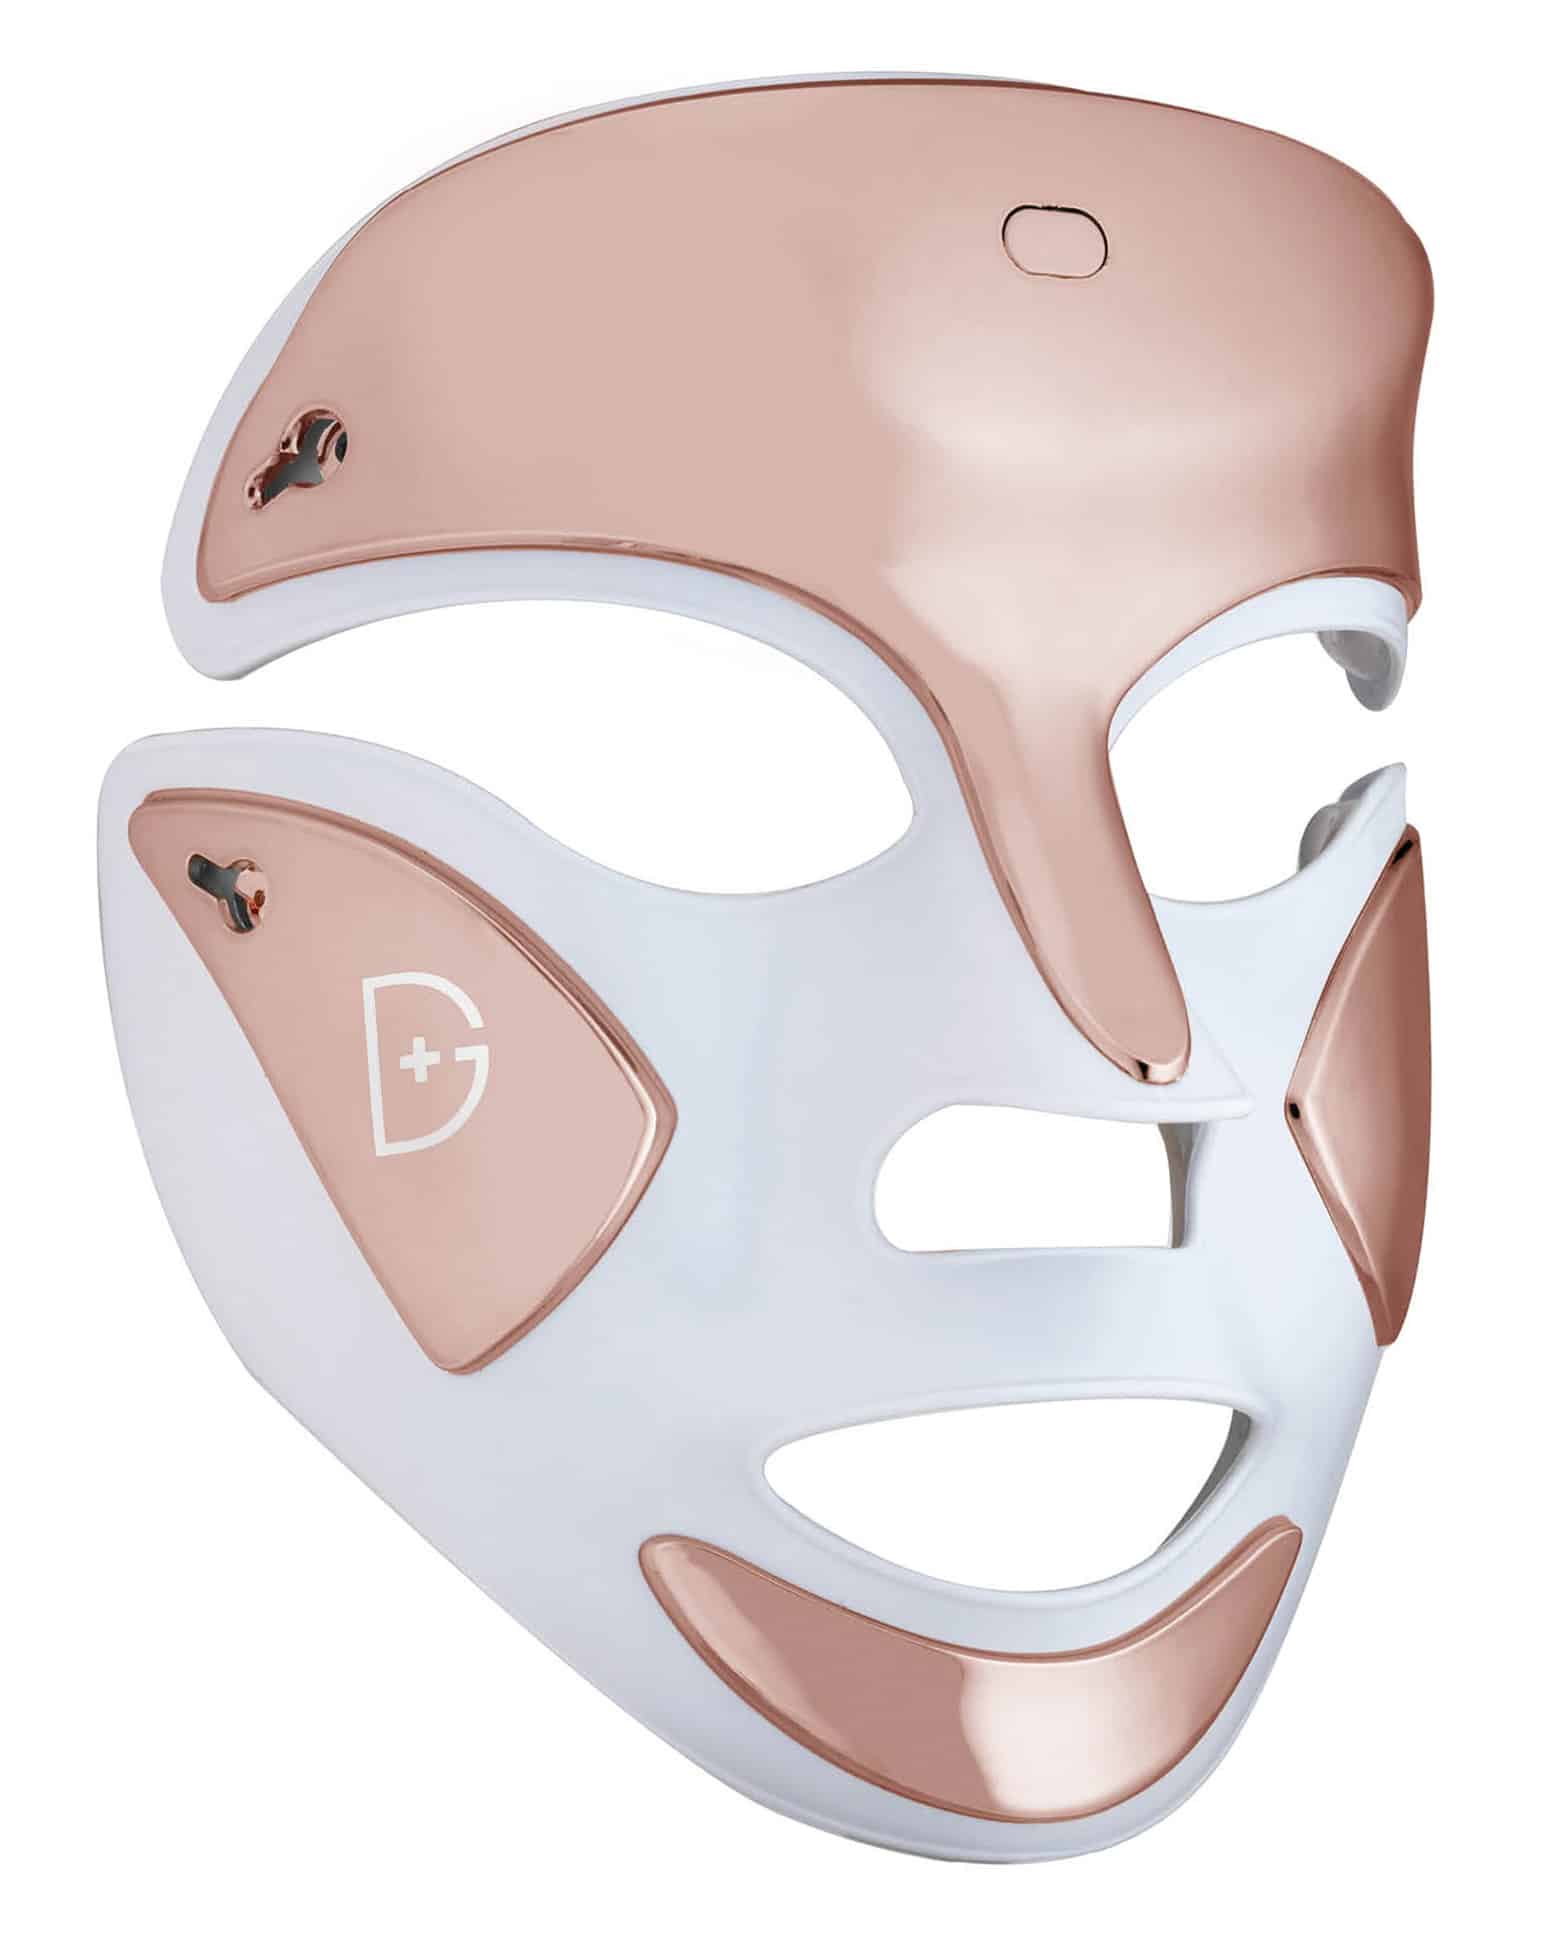 Dr Dennis Gross Skincare DRx SpectraLite FaceWare Pro